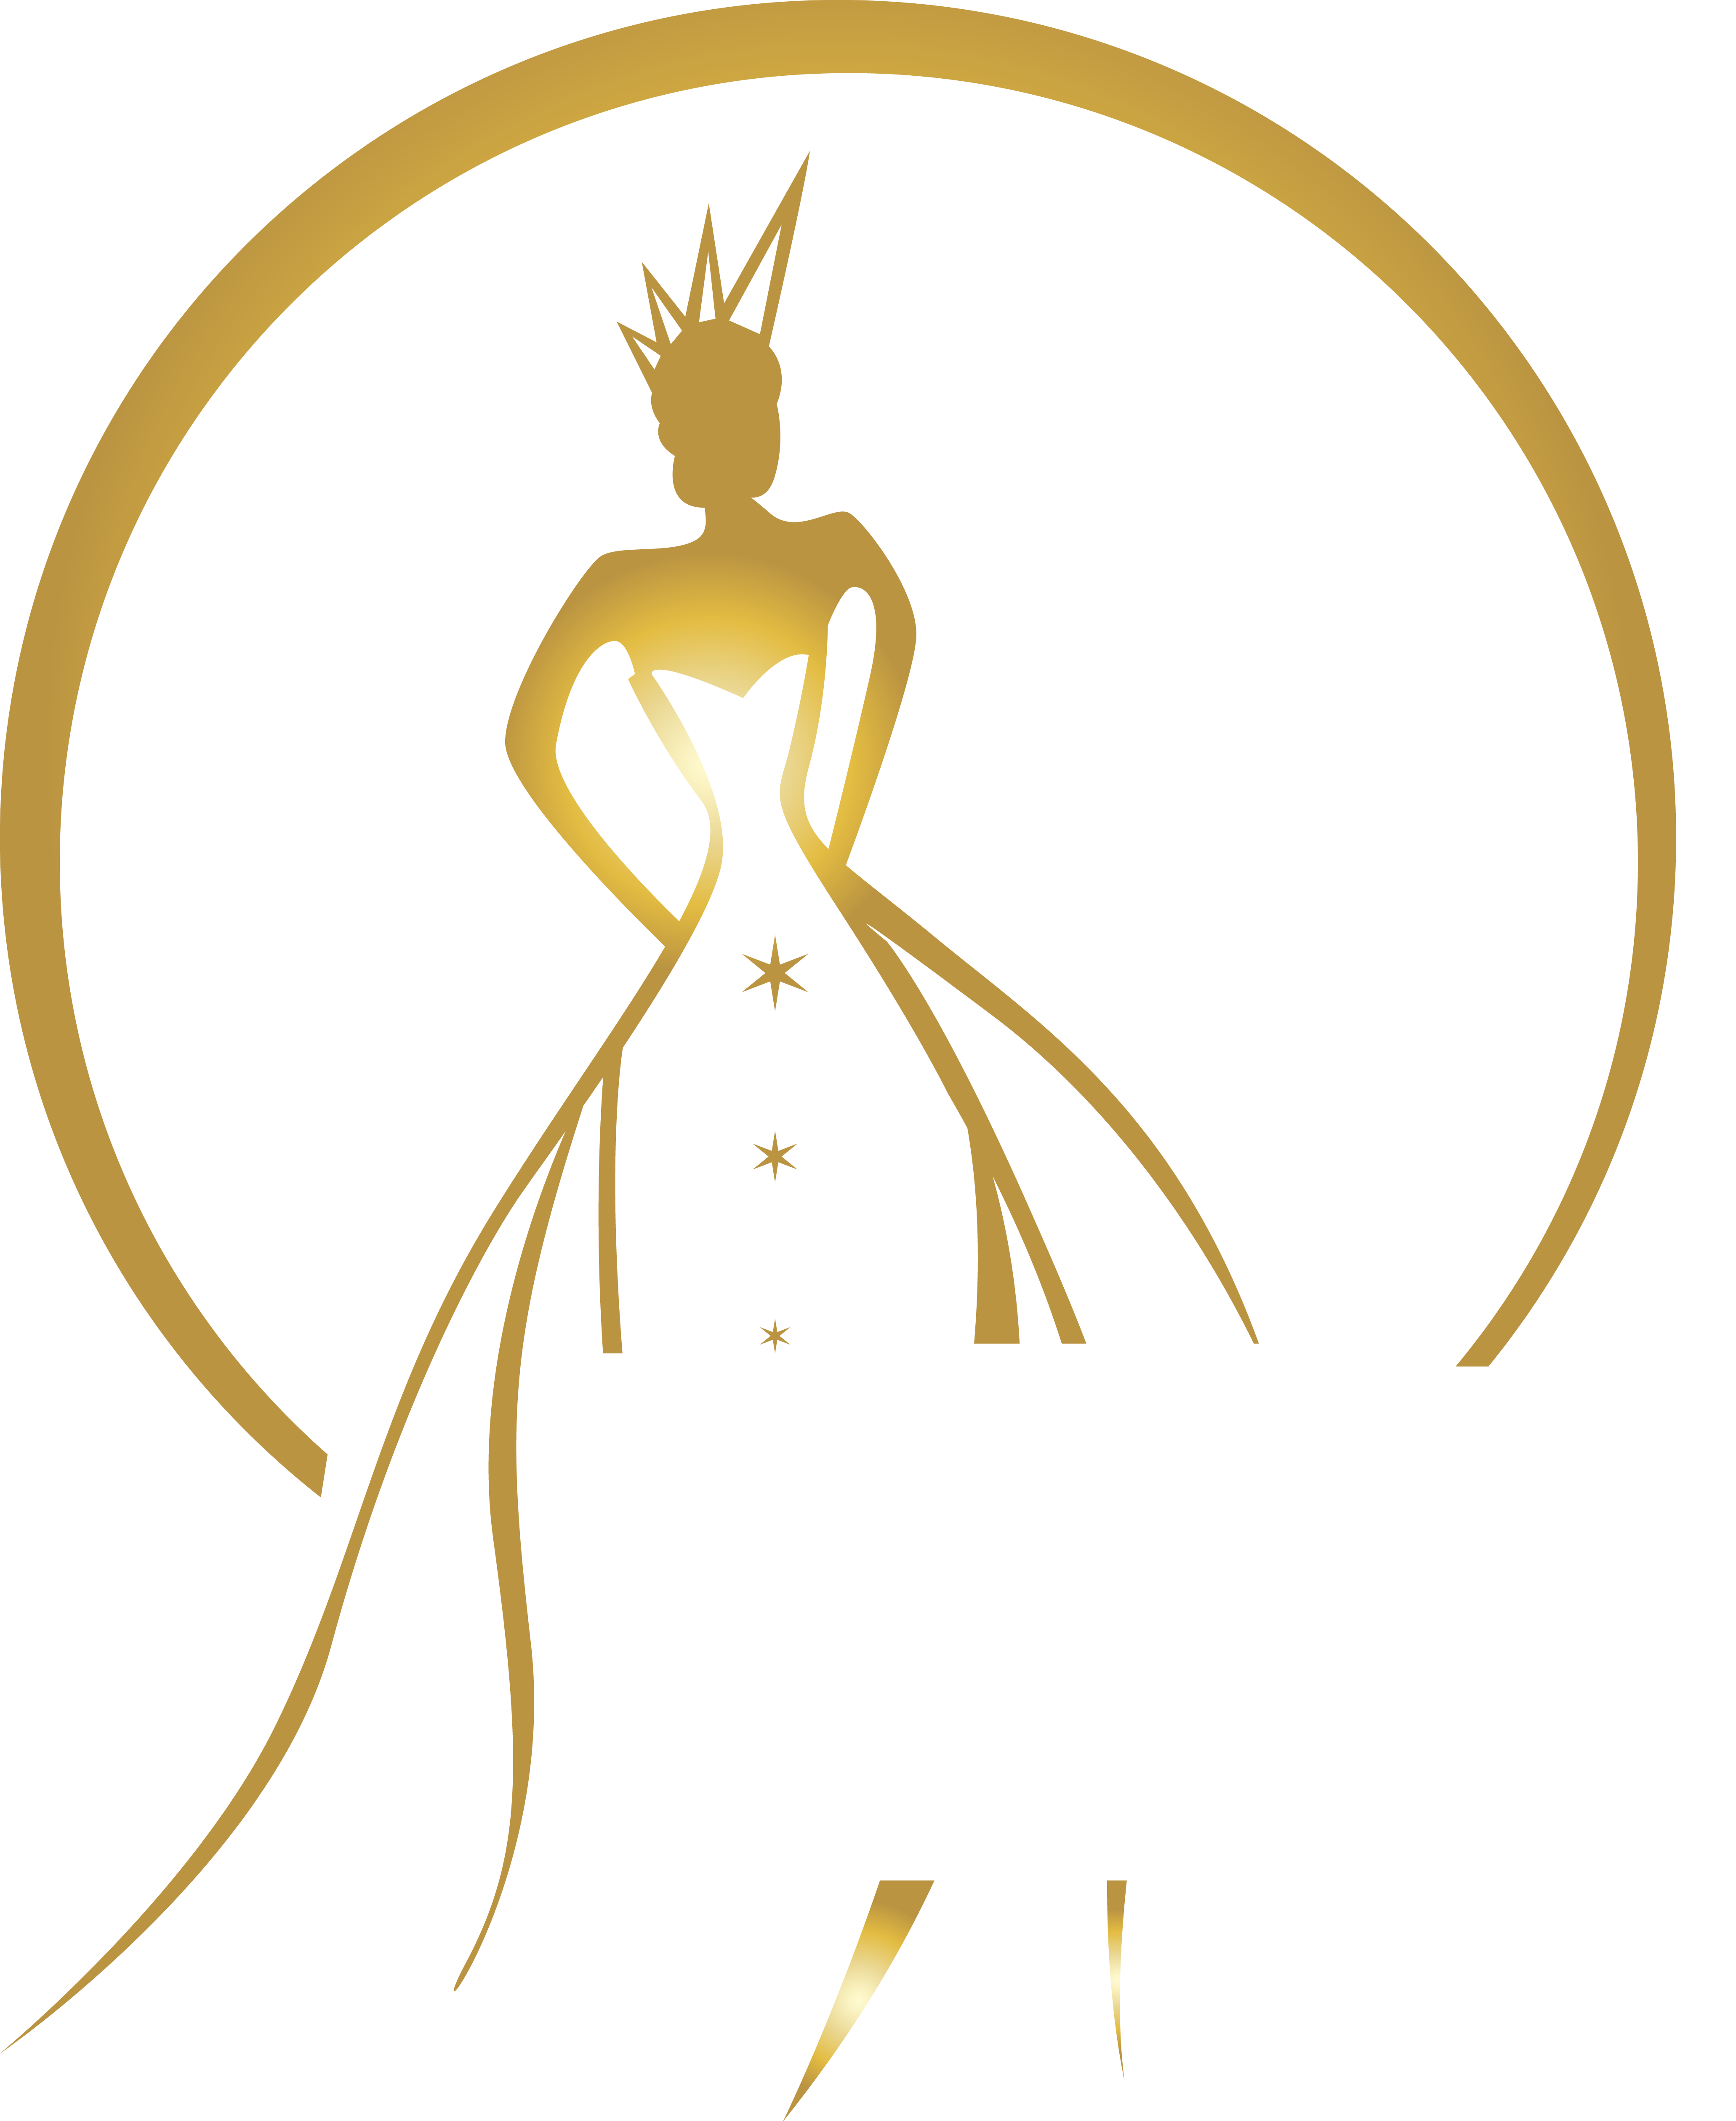 World Beauty Organization Top Model Philippines